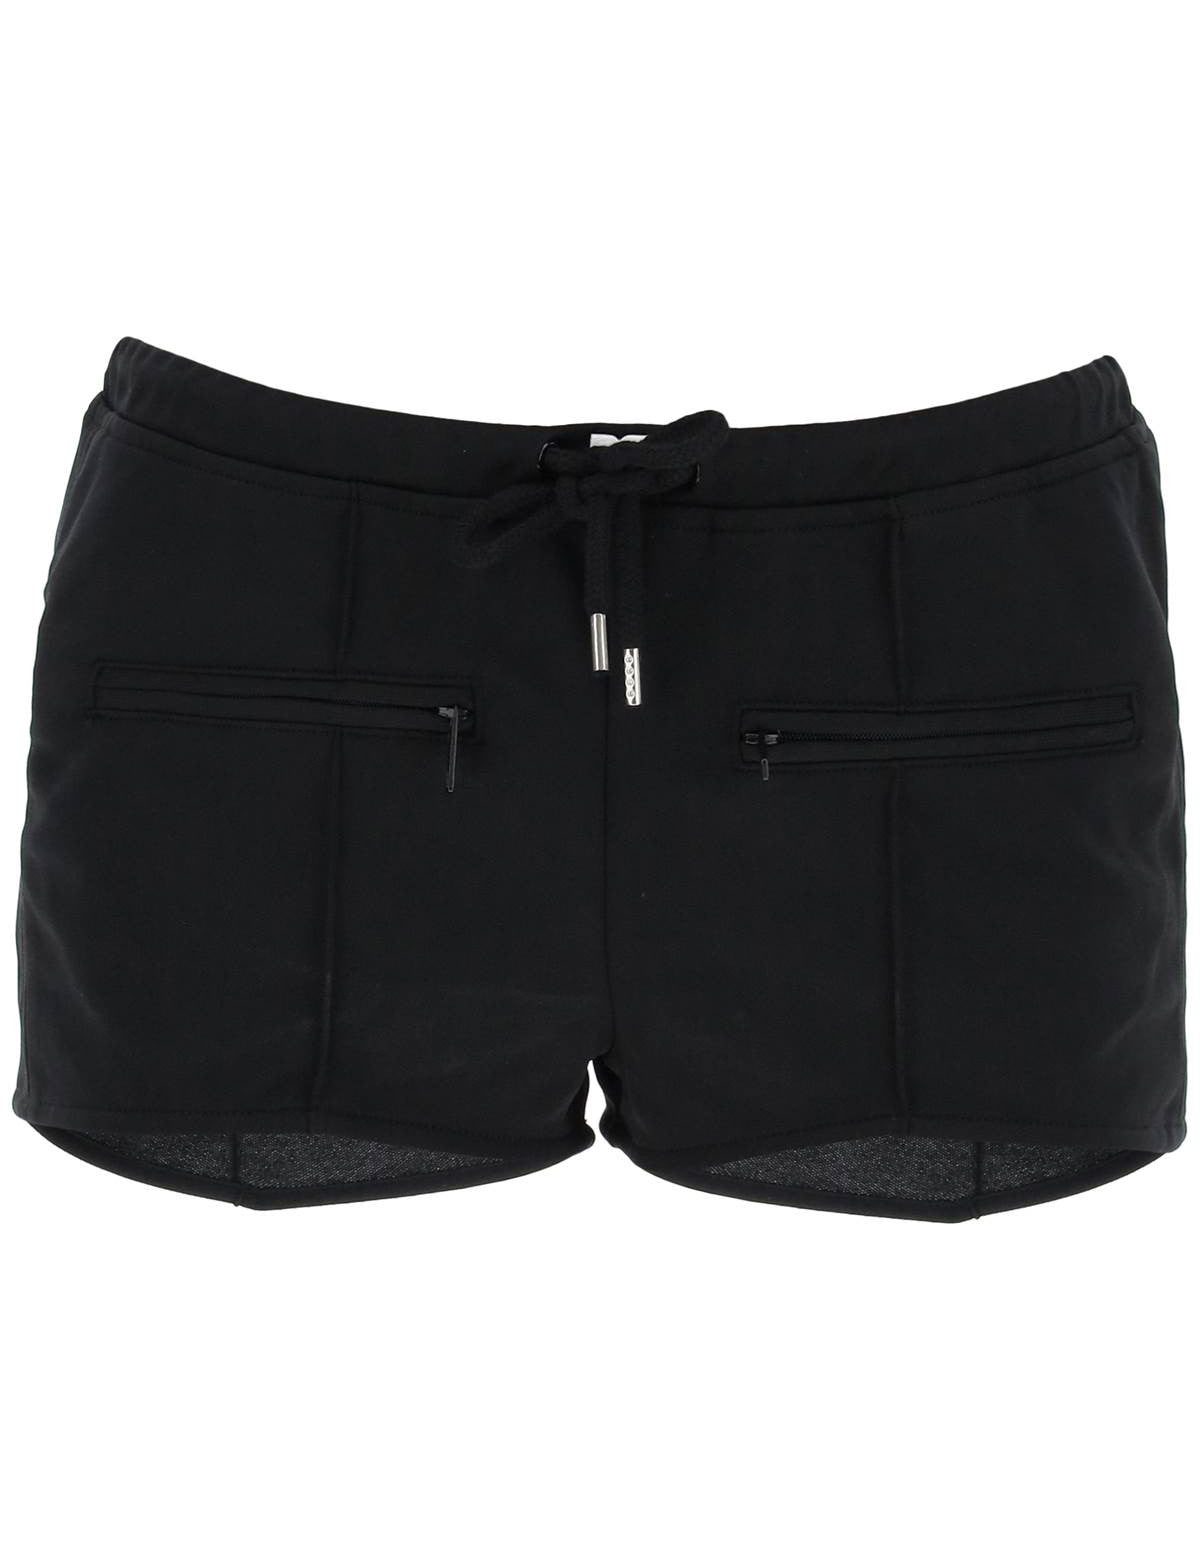 courreges-jersey-interlock-mini-shorts.jpg